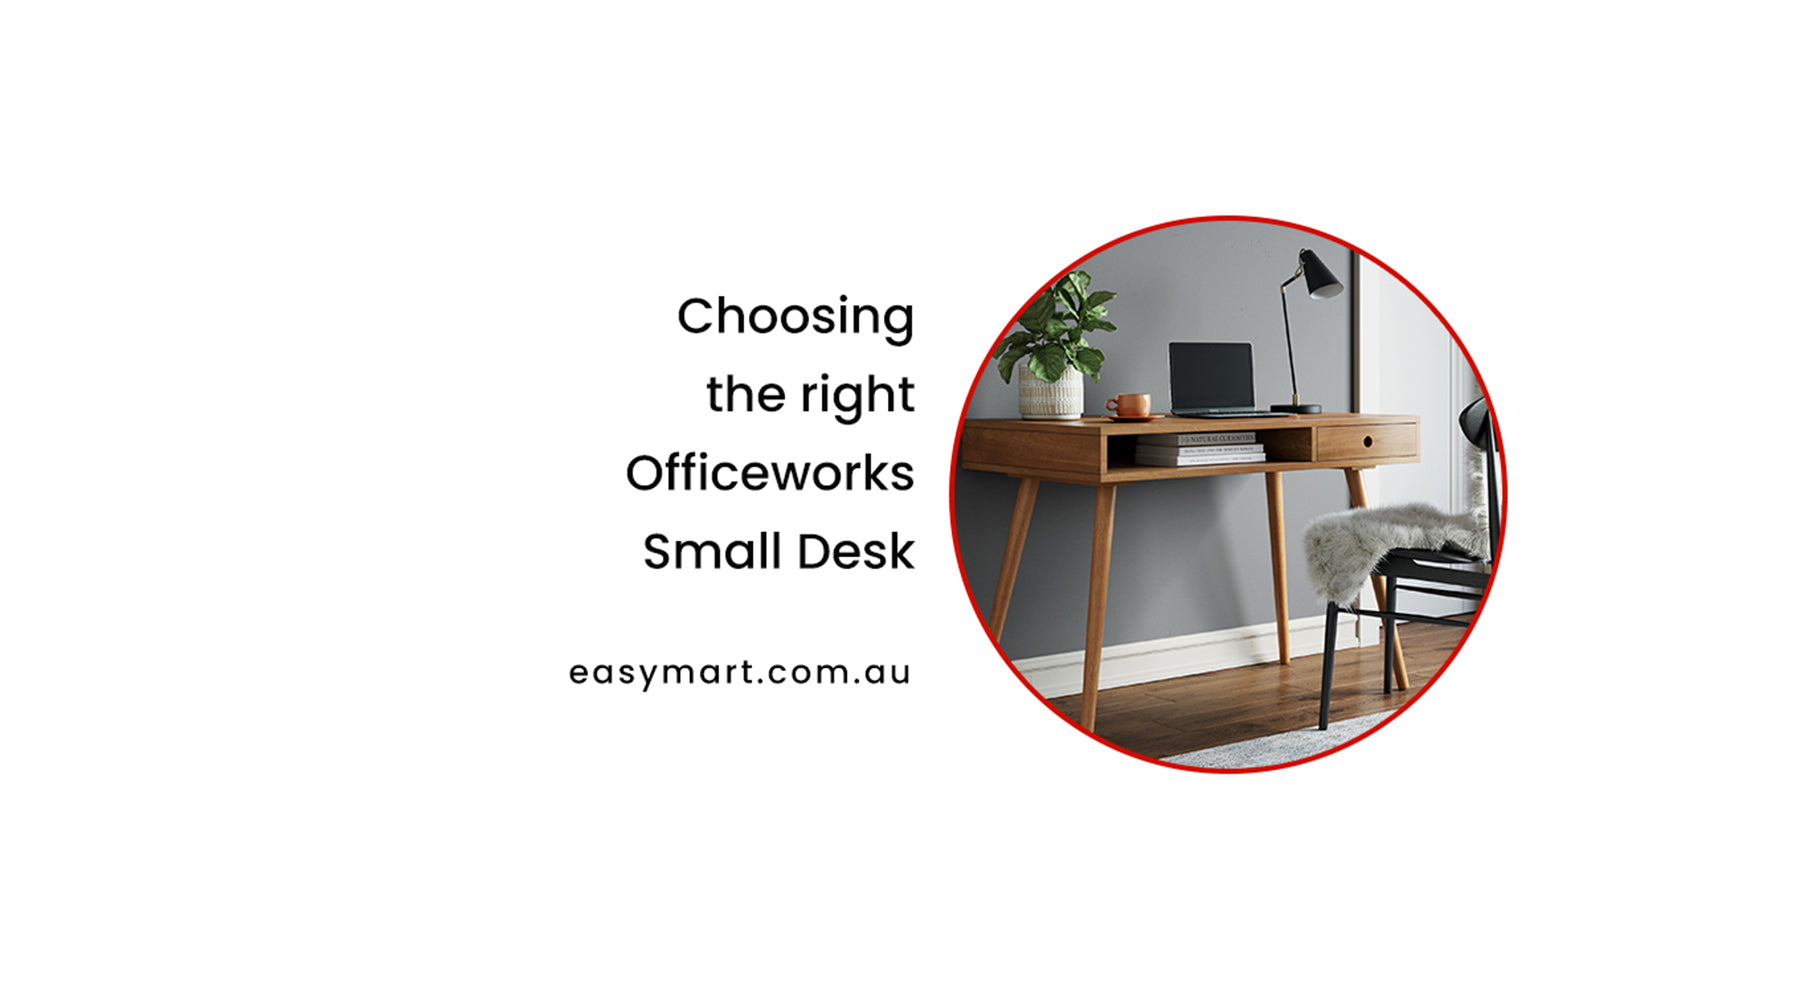 Choosing the right Officeworks Small Desk